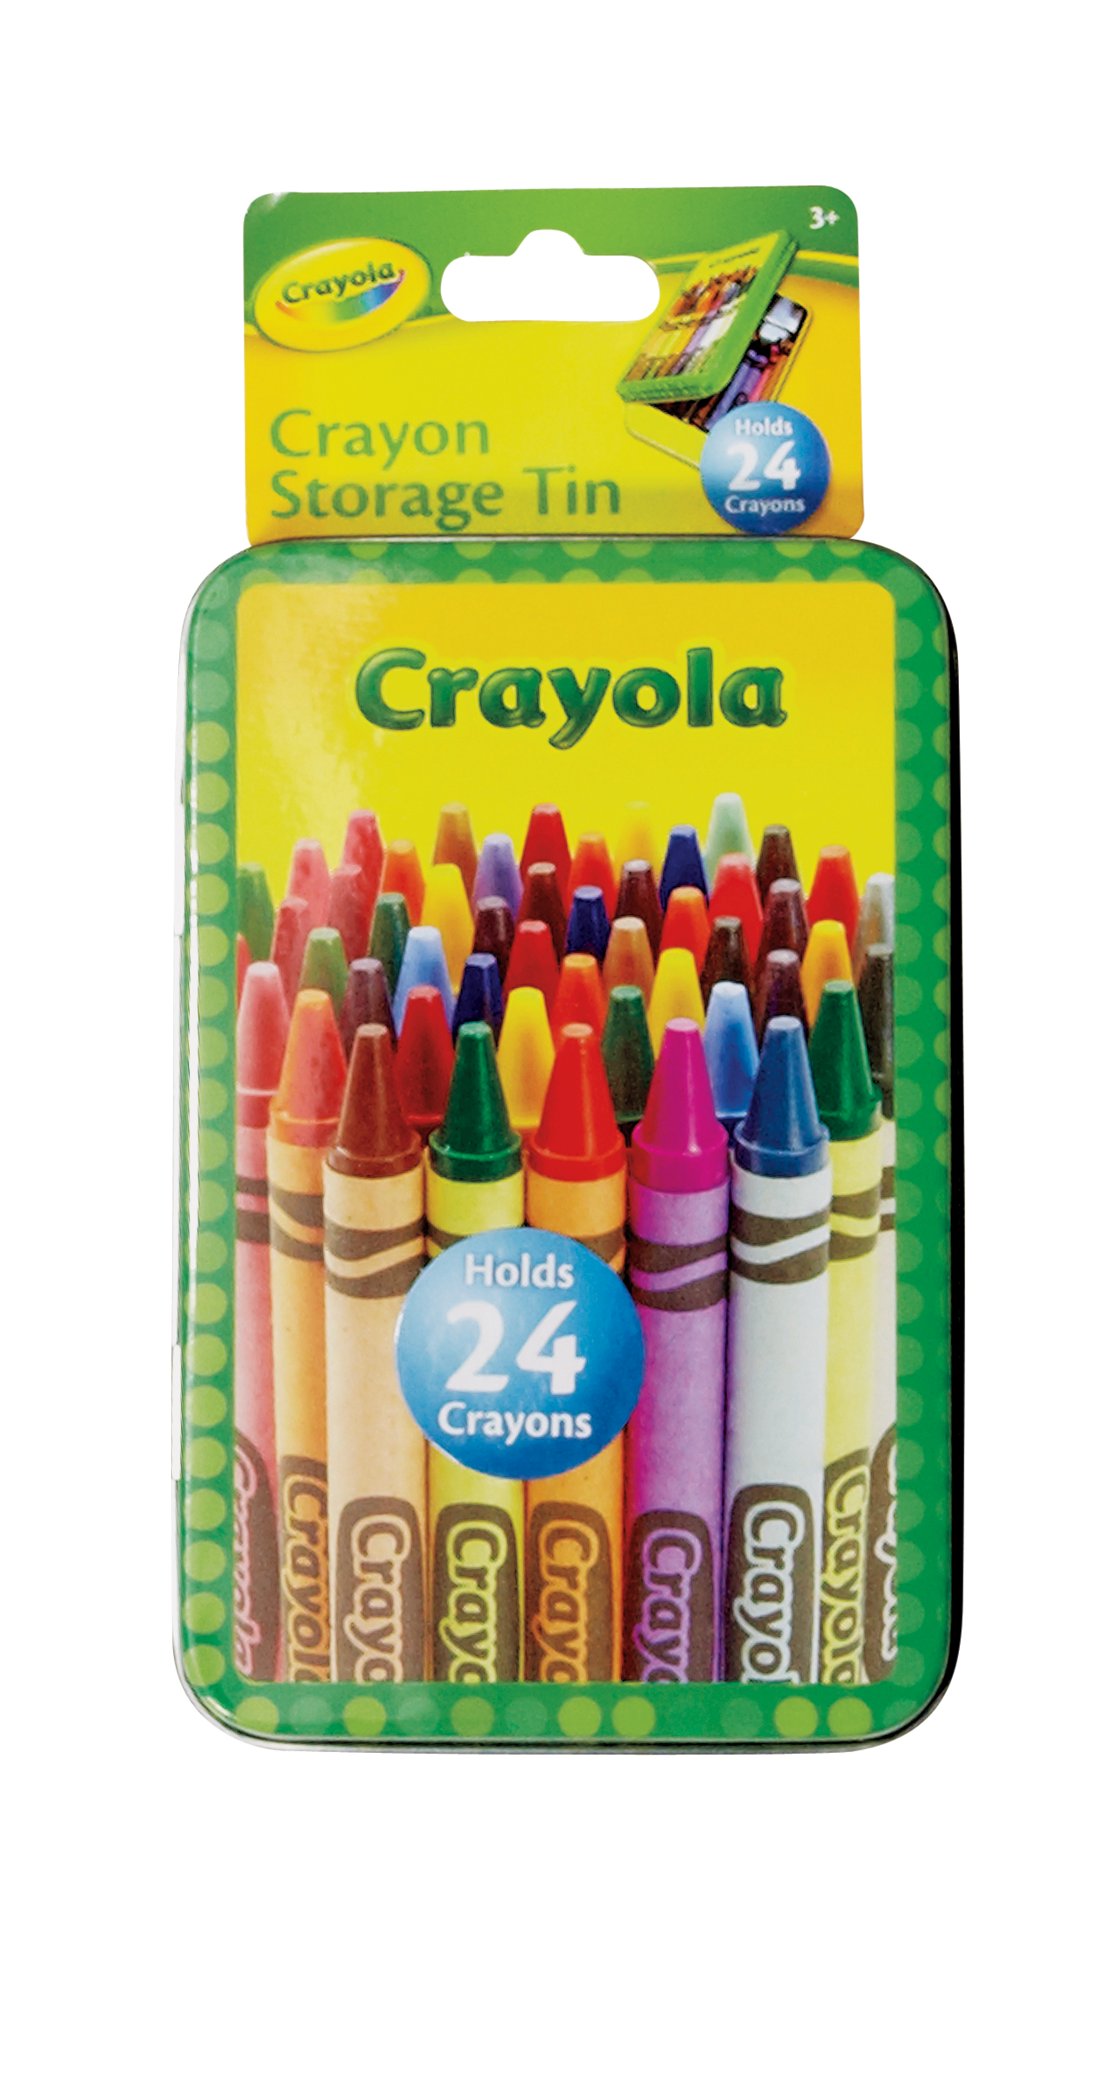 64 Crayon Storage Tin, 6.25 x 4.25 x 2 inches